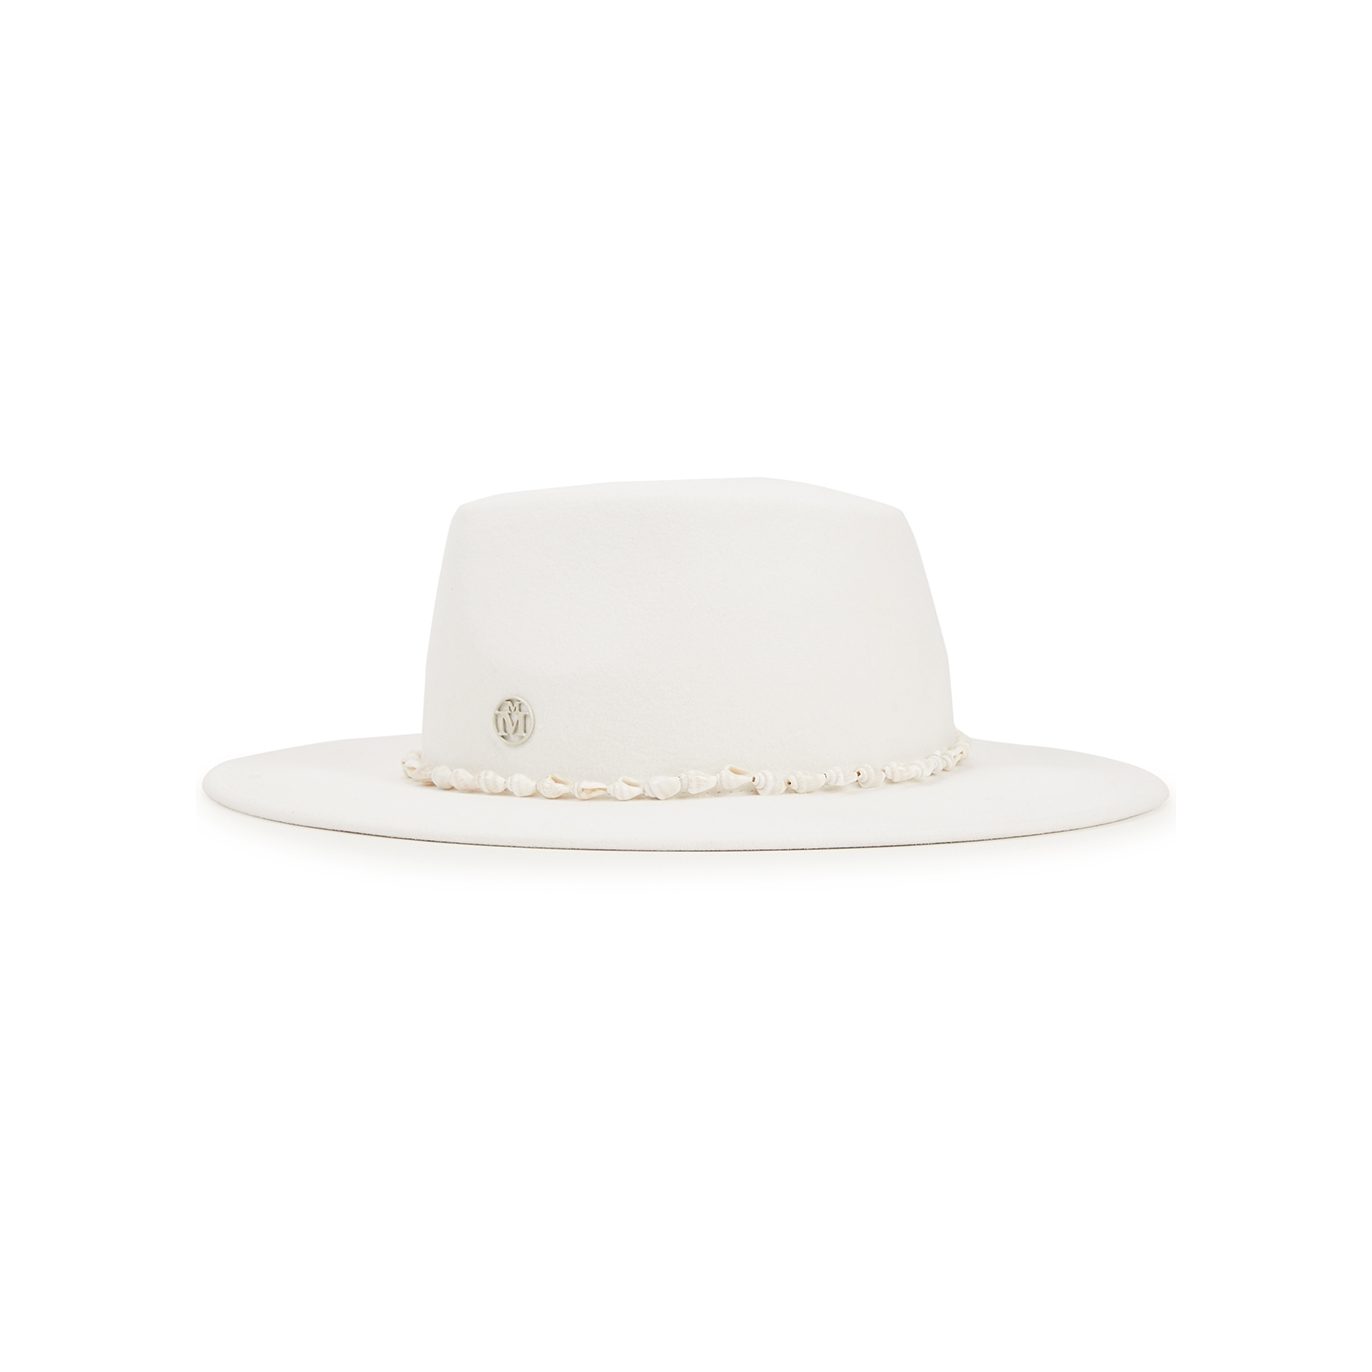 Maison Michel Paris Kyra Seashell-trimmed Felt Hat